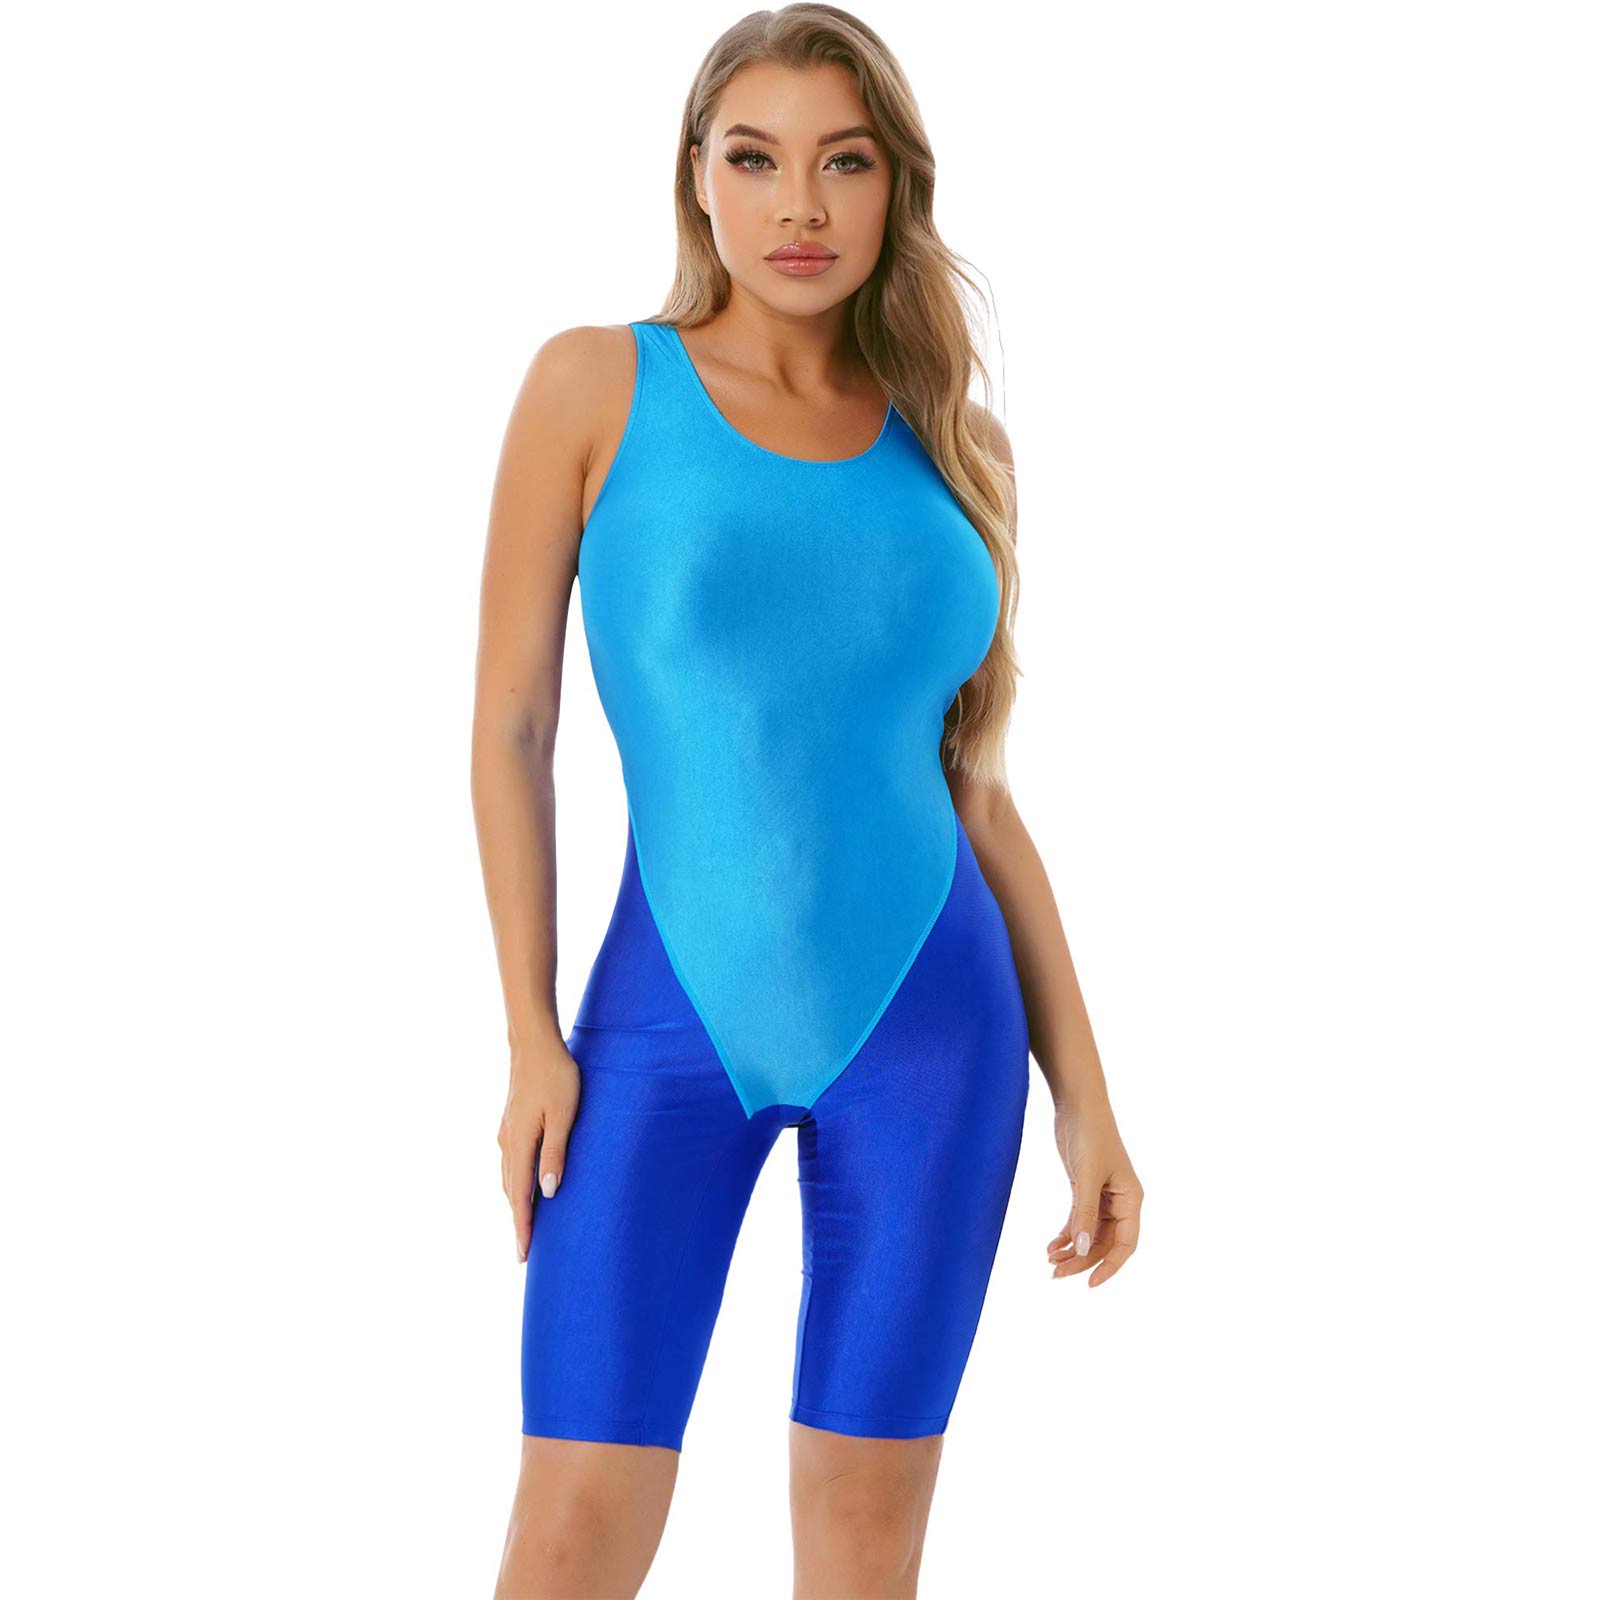 Retro Leotard Look Blue One Piece Knee Suit Swimsuit - Splashwear